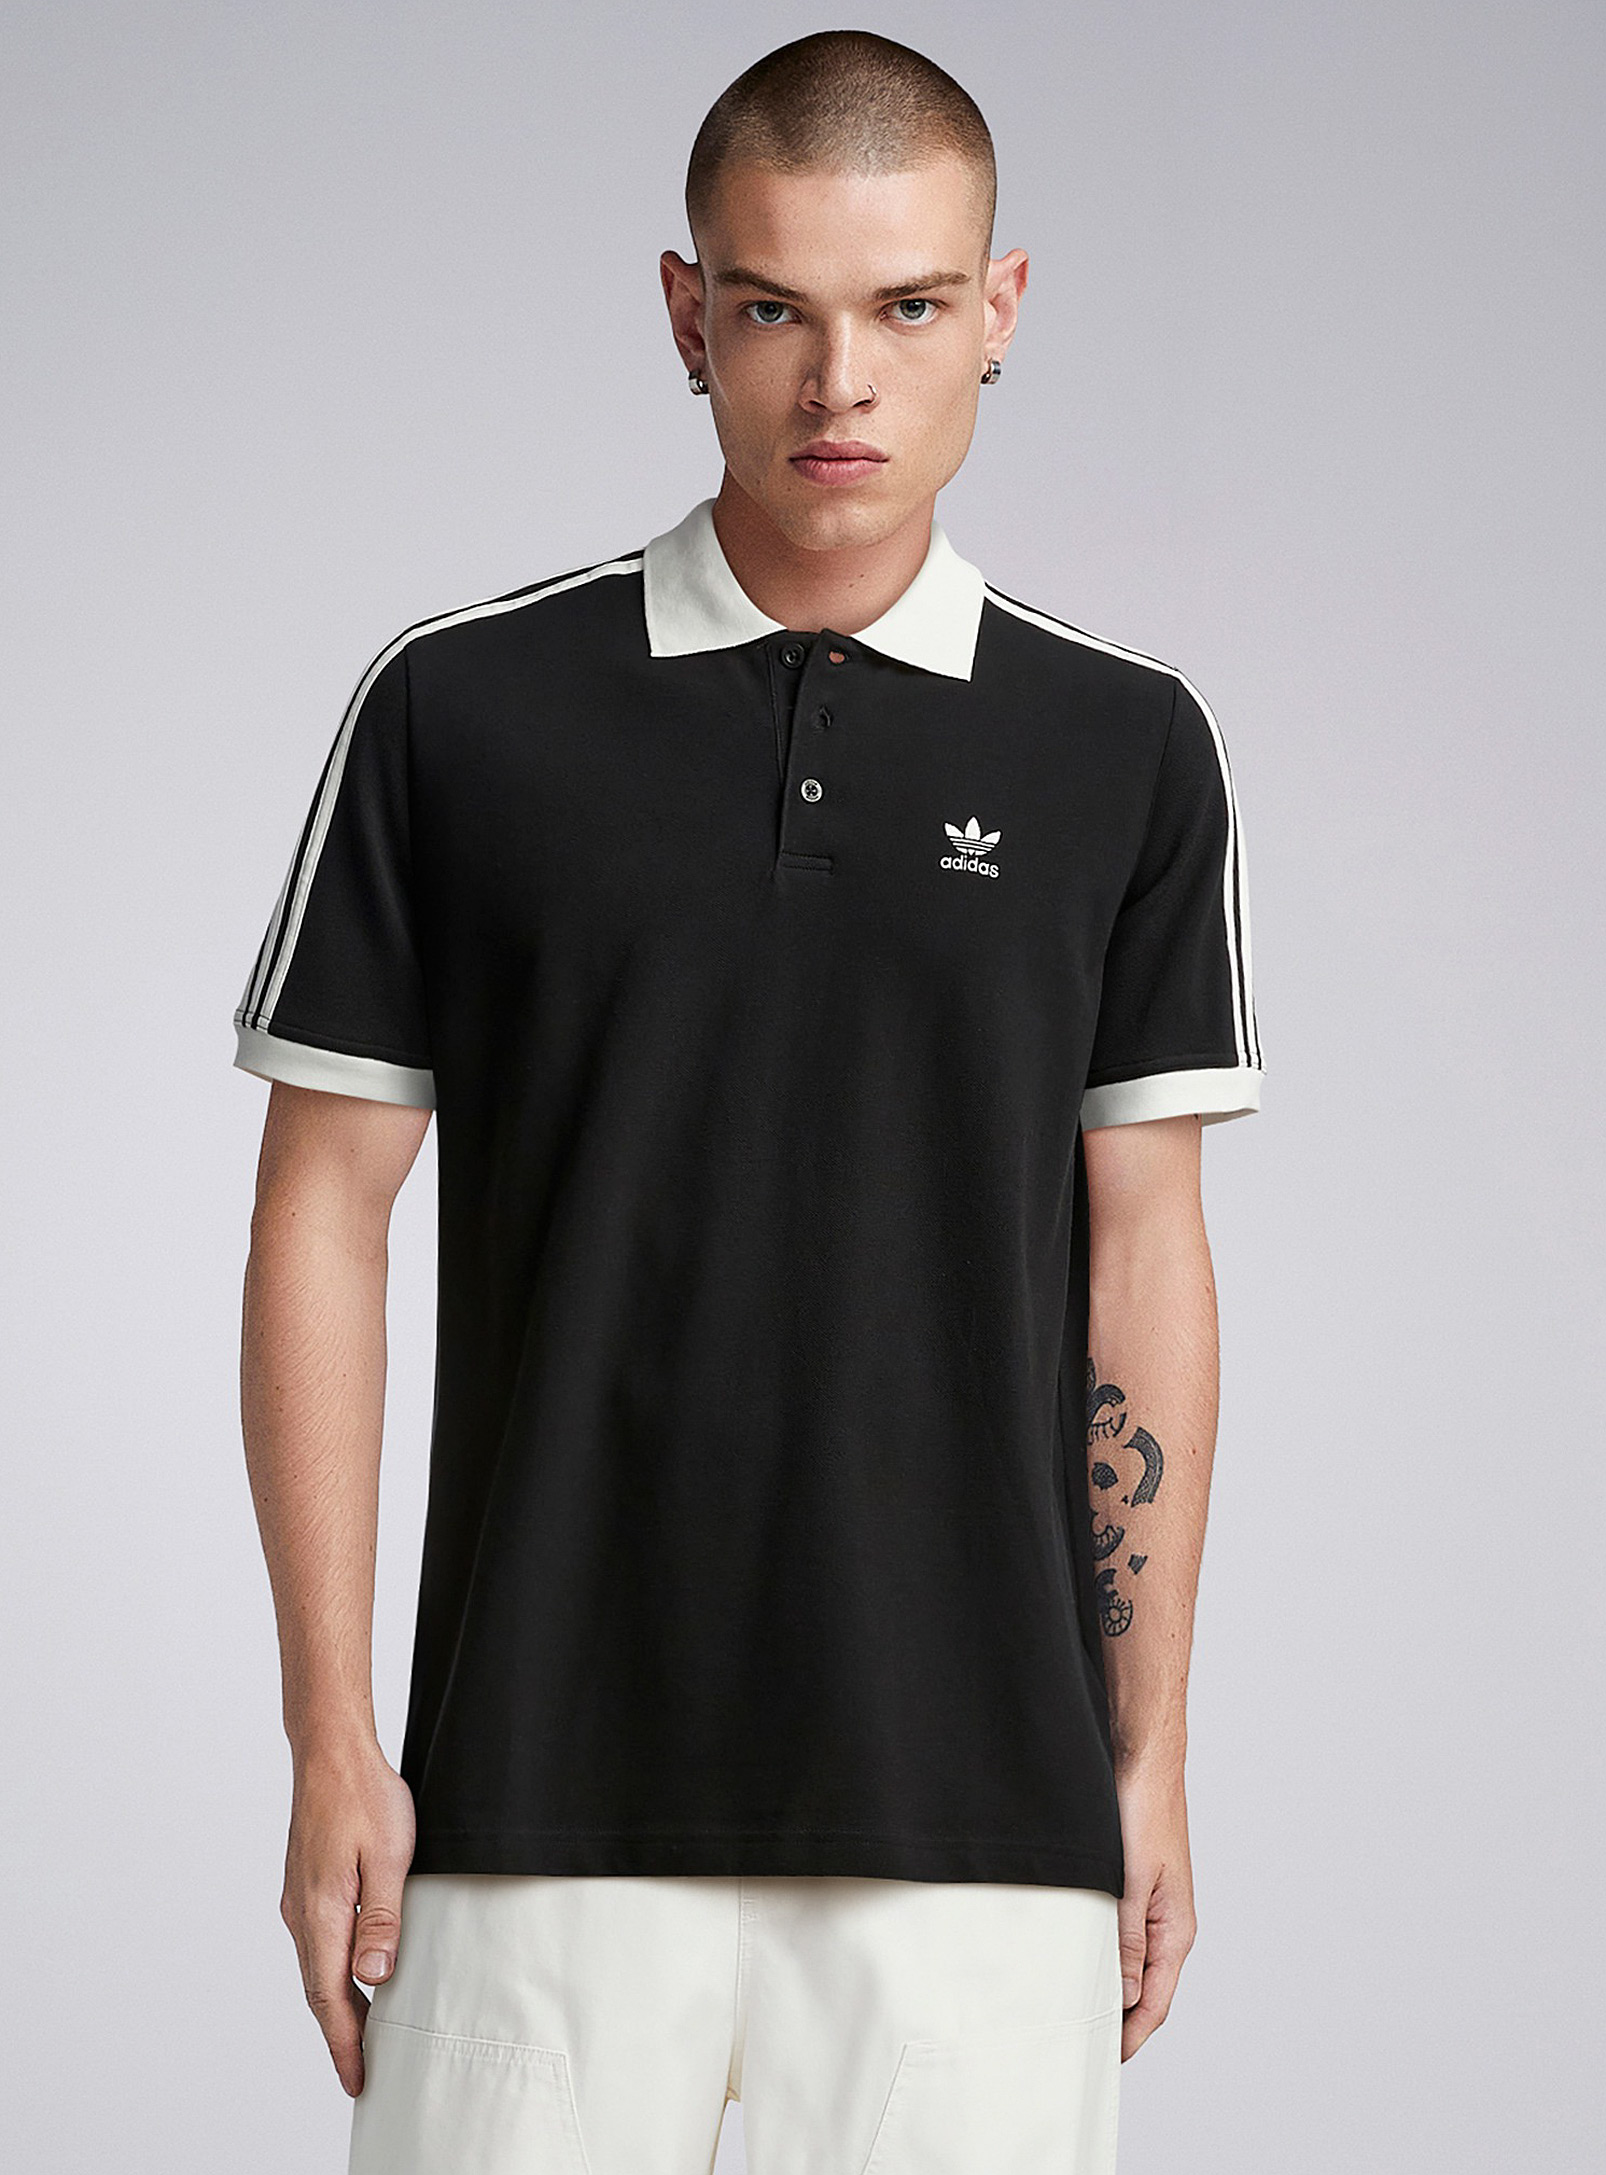 Adidas - Men's Contrast 3-stripe Polo Shirt